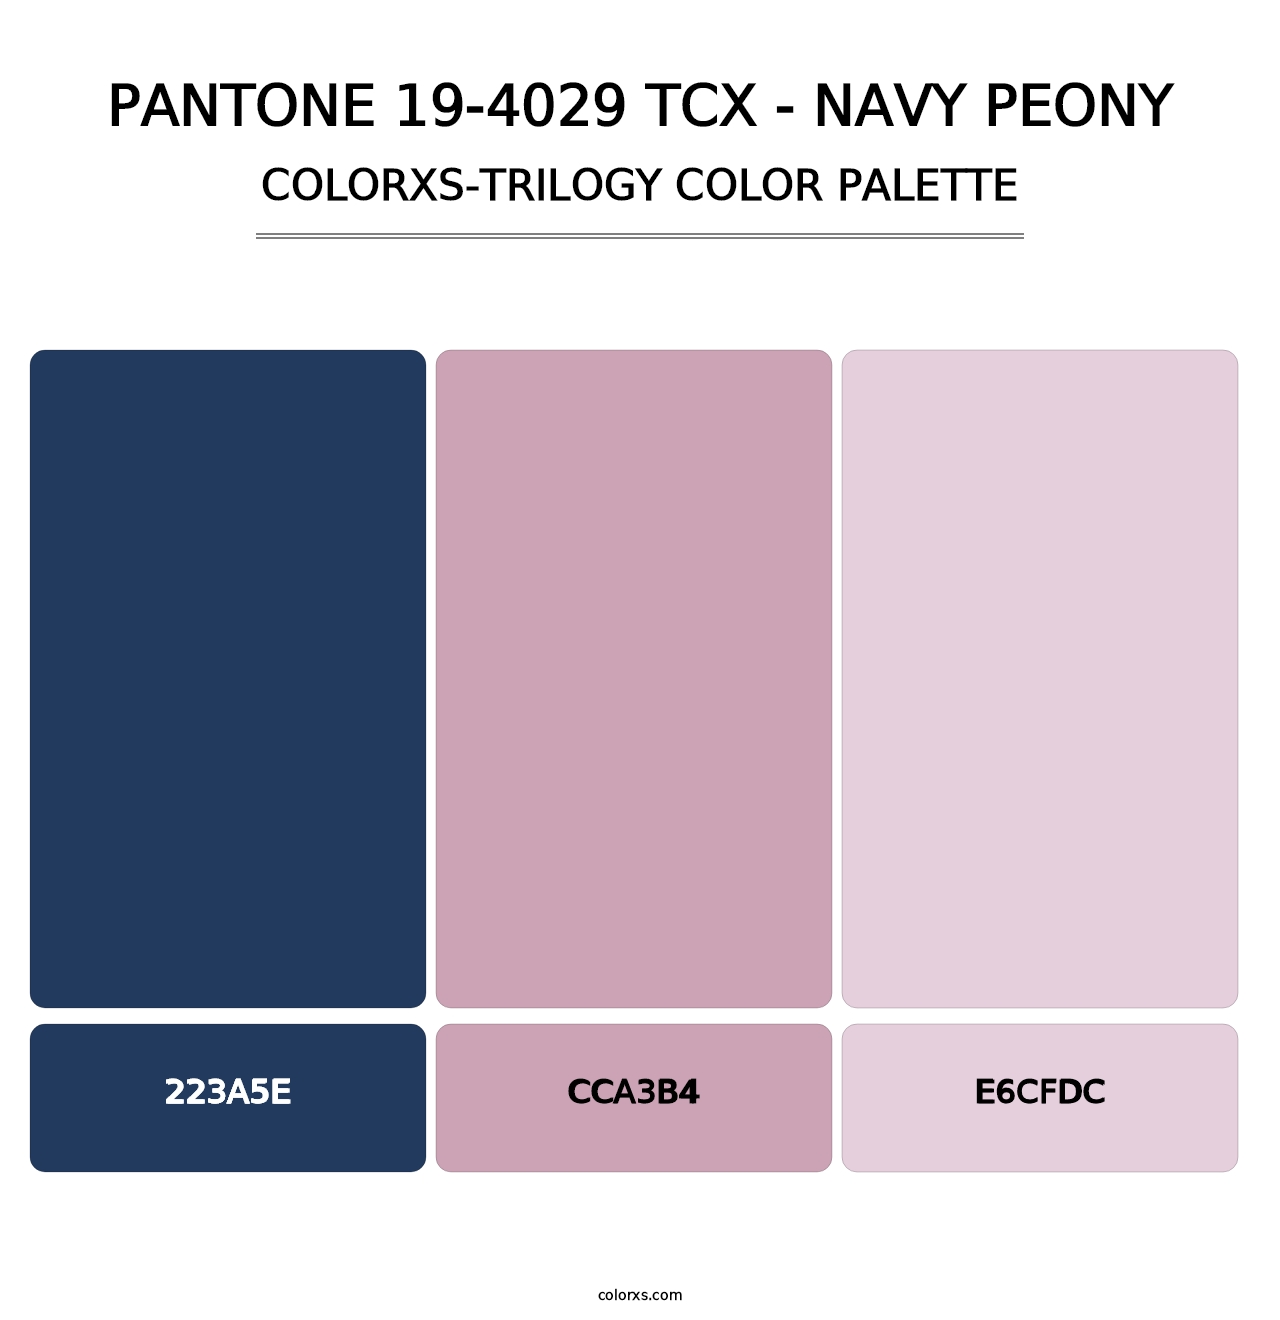 PANTONE 19-4029 TCX - Navy Peony - Colorxs Trilogy Palette